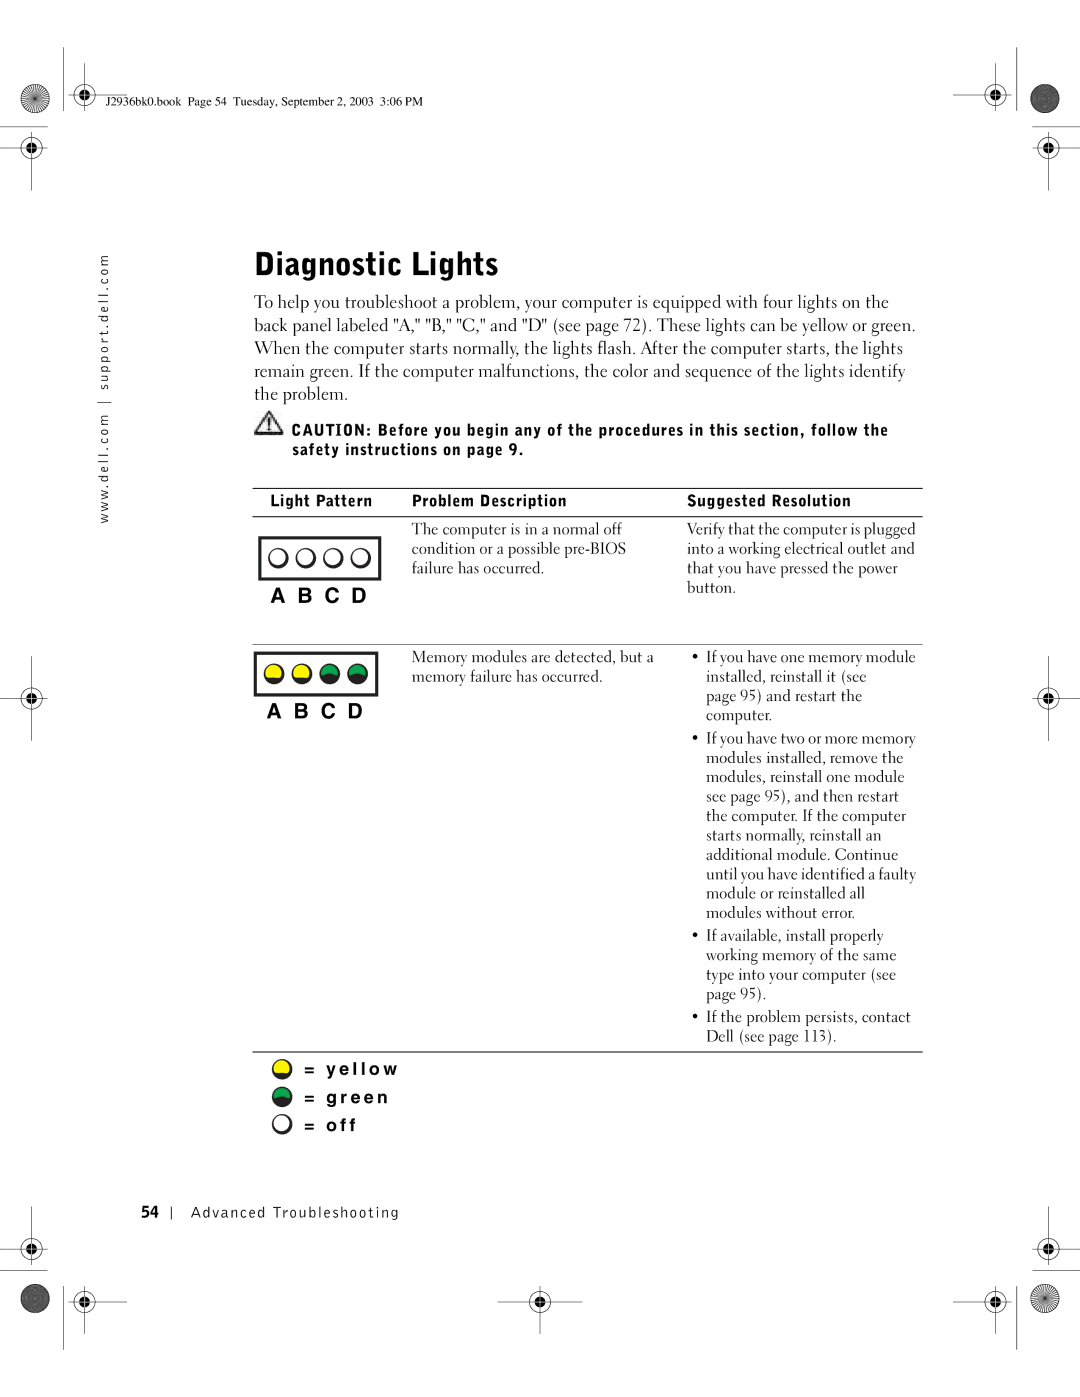 Dell J2936 manual Diagnostic Lights, Light Pattern Problem Description Suggested Resolution, Advanced Troubleshooting 